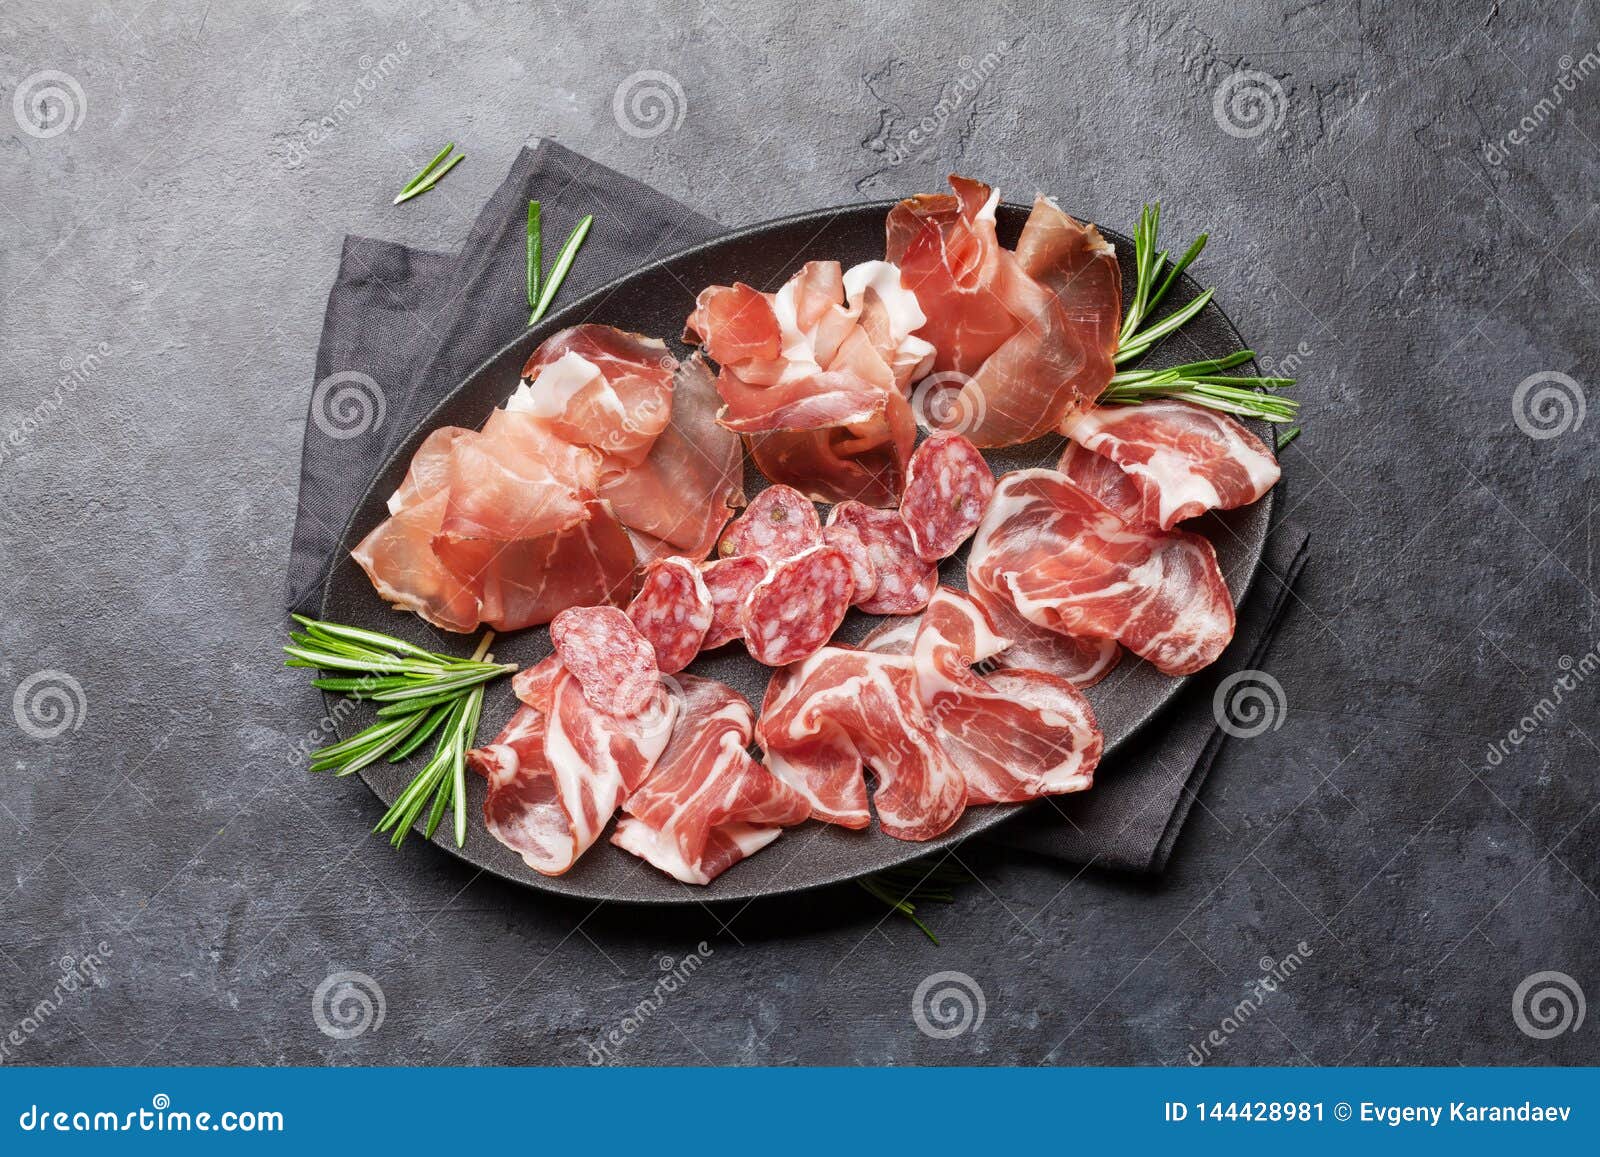 spanish jamon, prosciutto crudo ham, italian salami